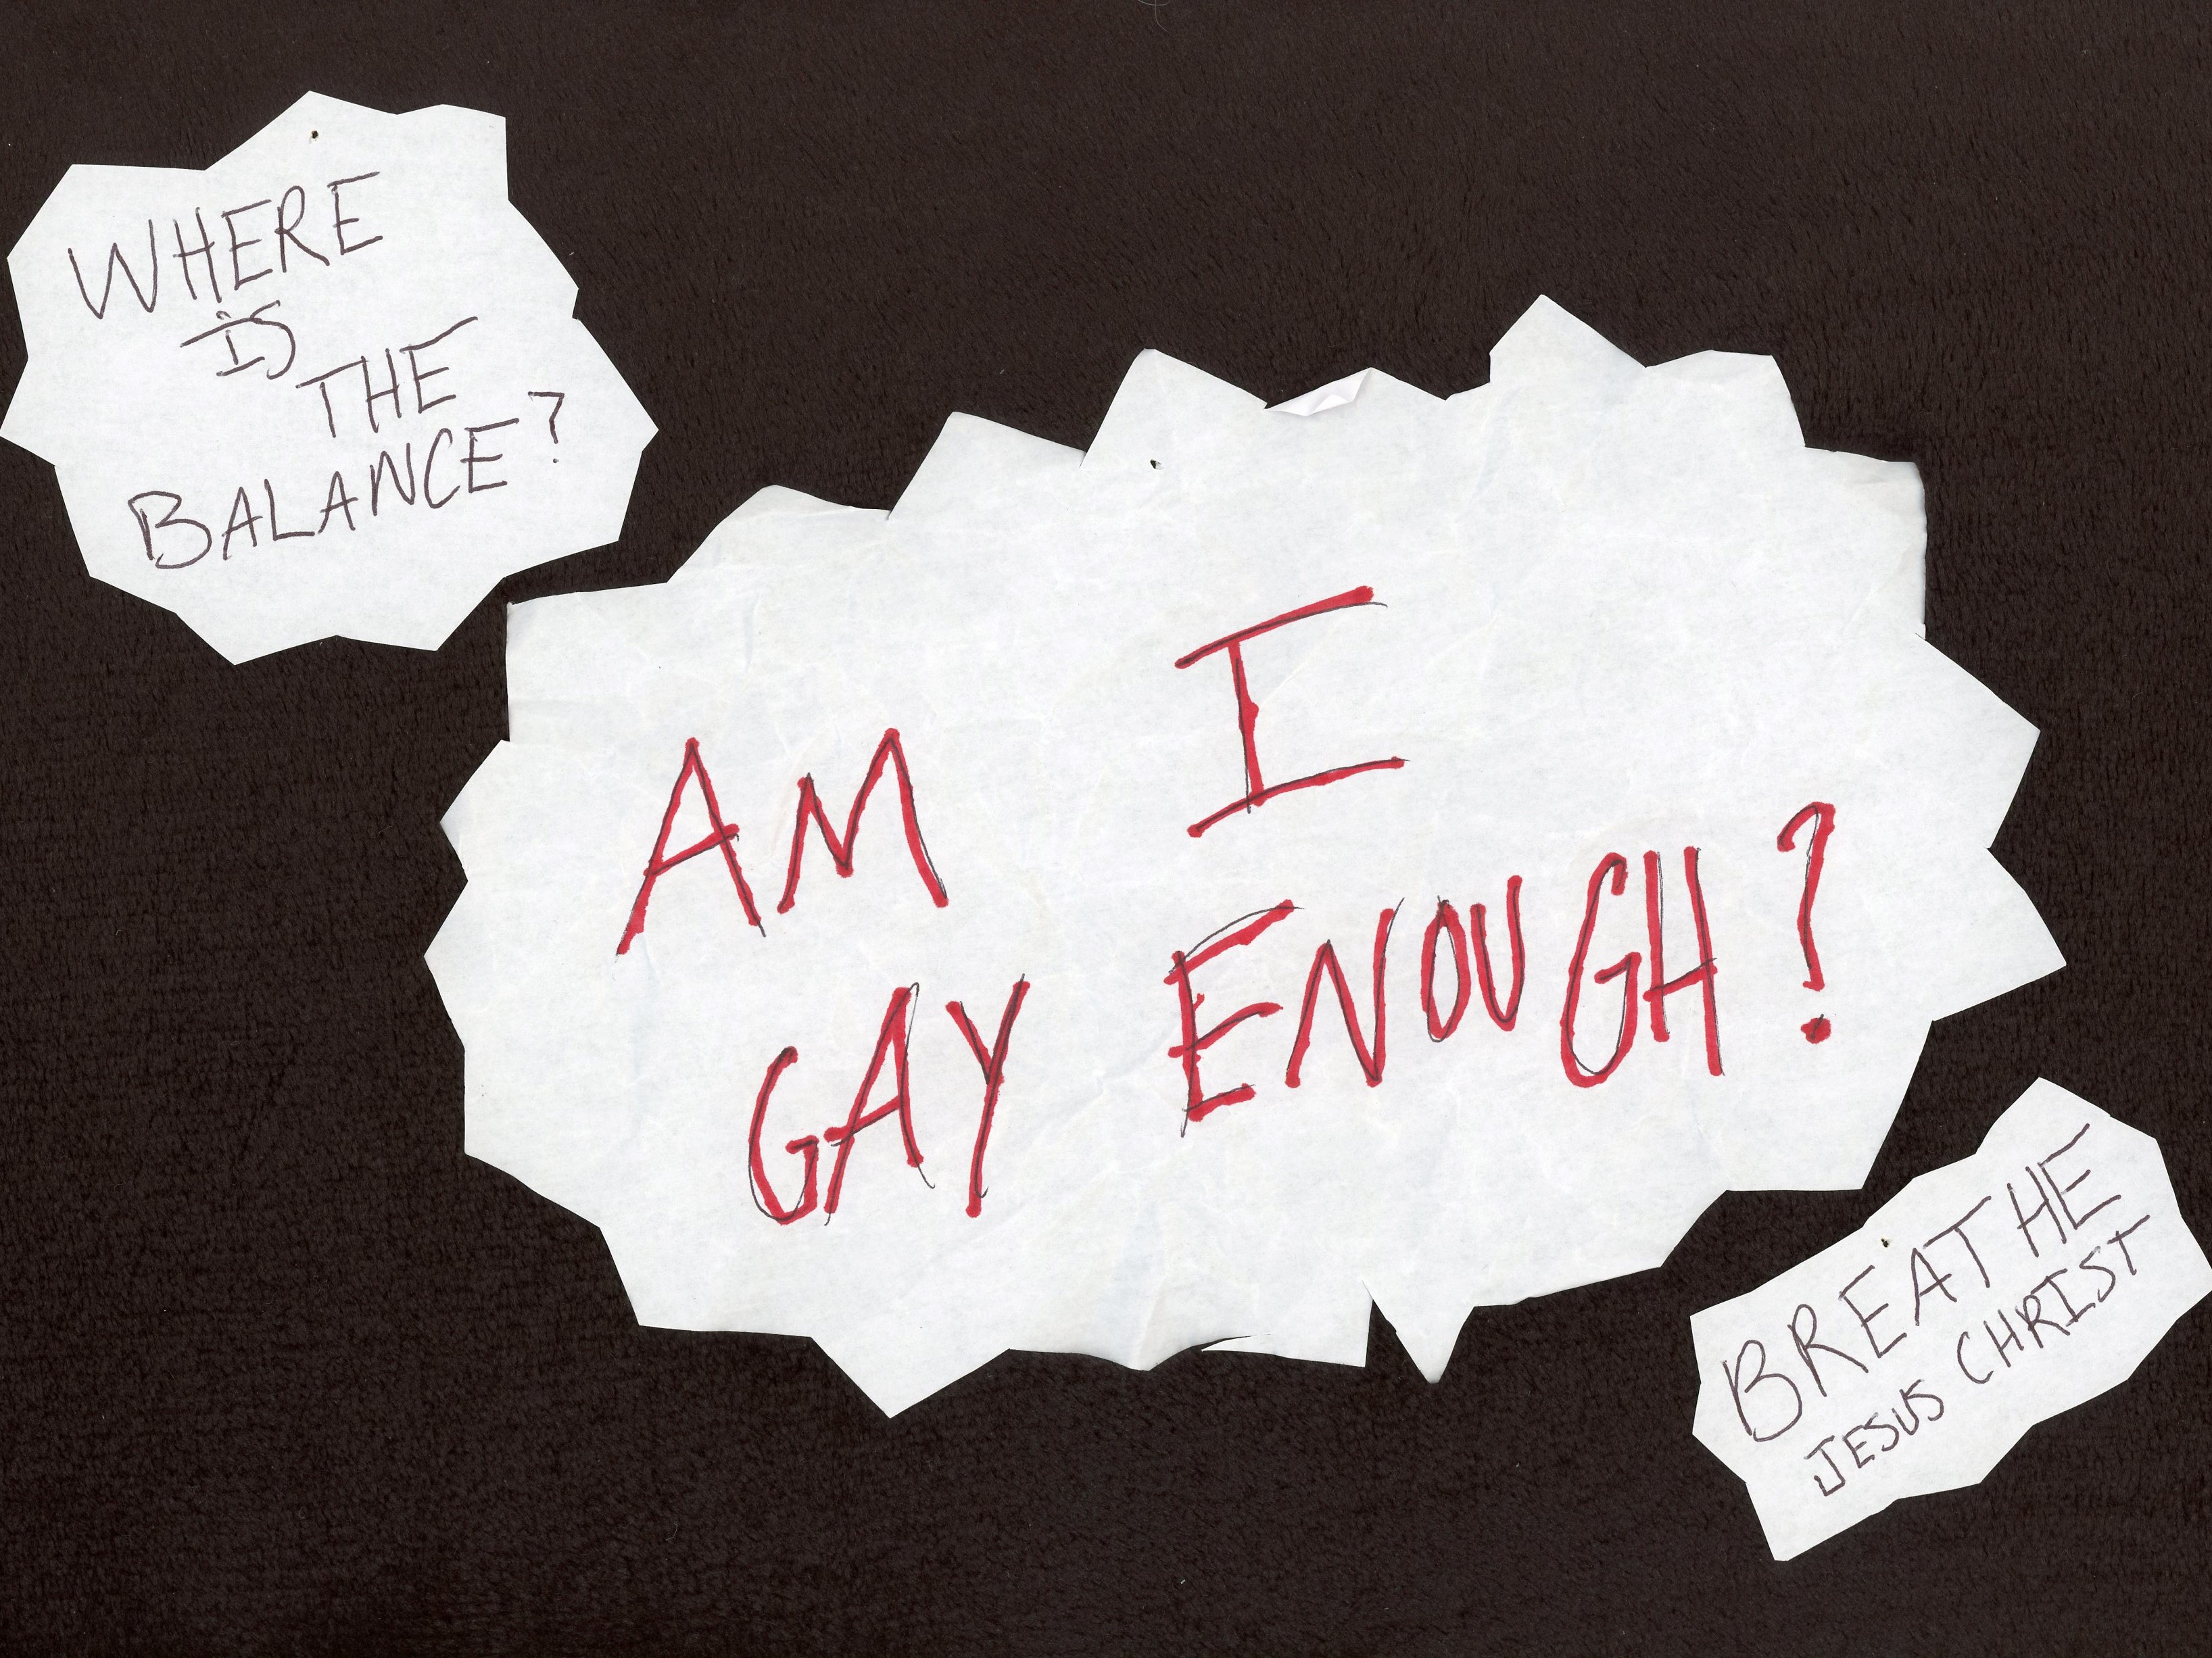 "AM I GAY ENOUGH?"